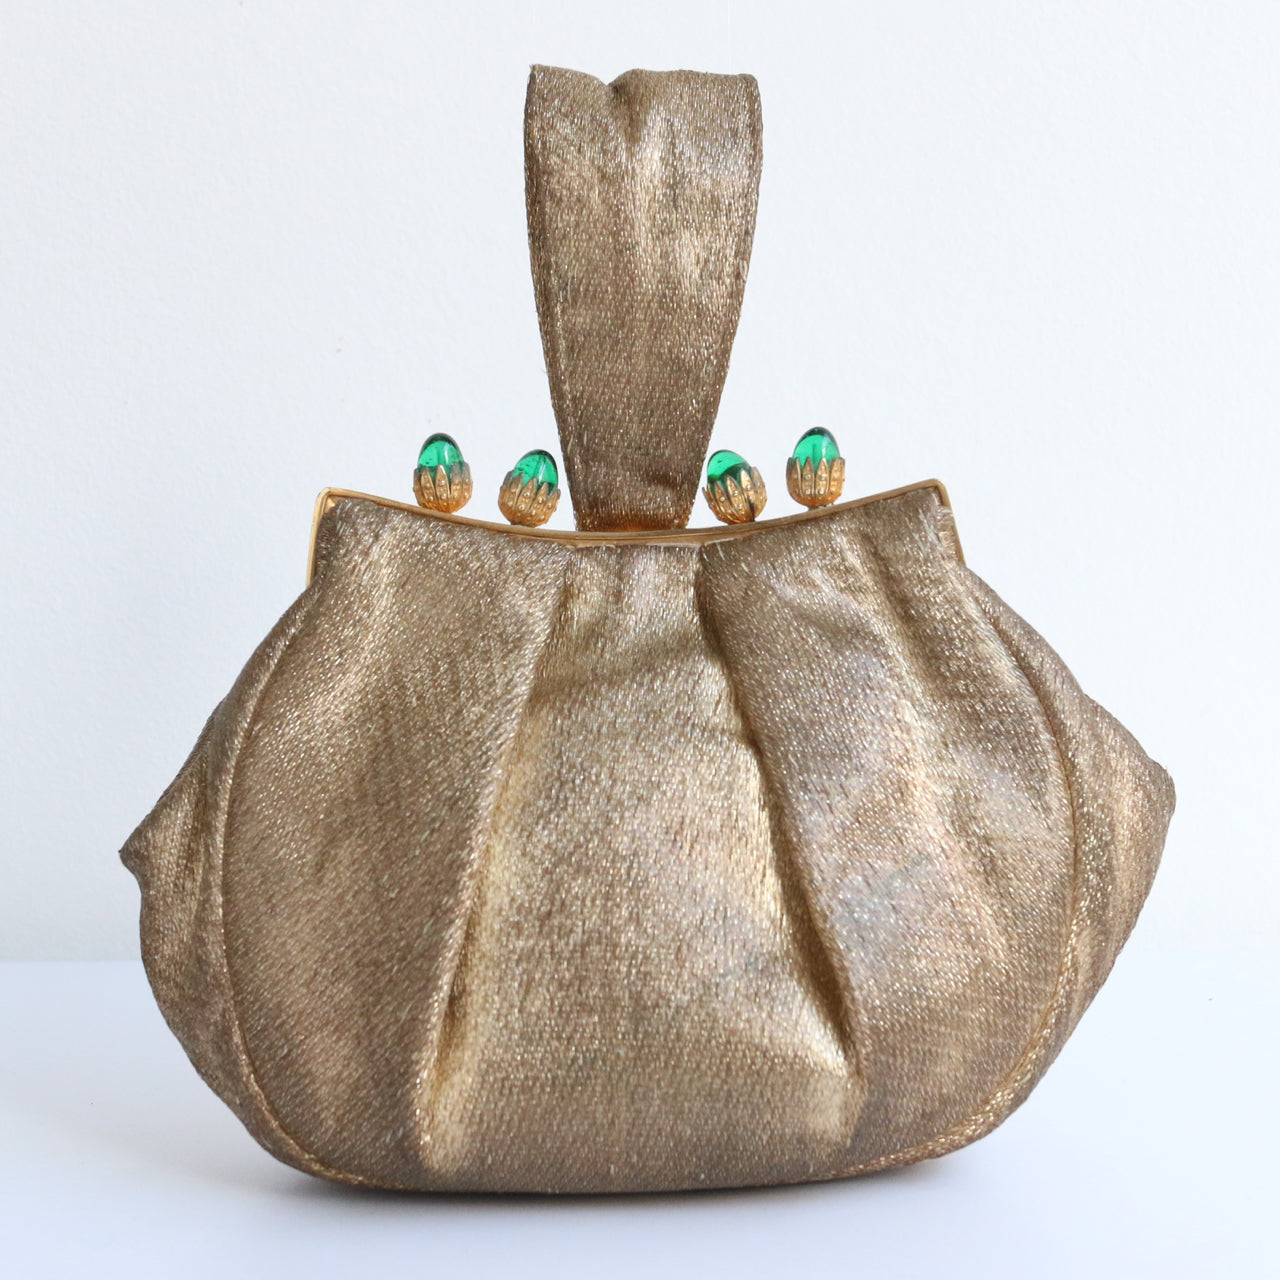 Vintage Bags – Willow Hilson Vintage